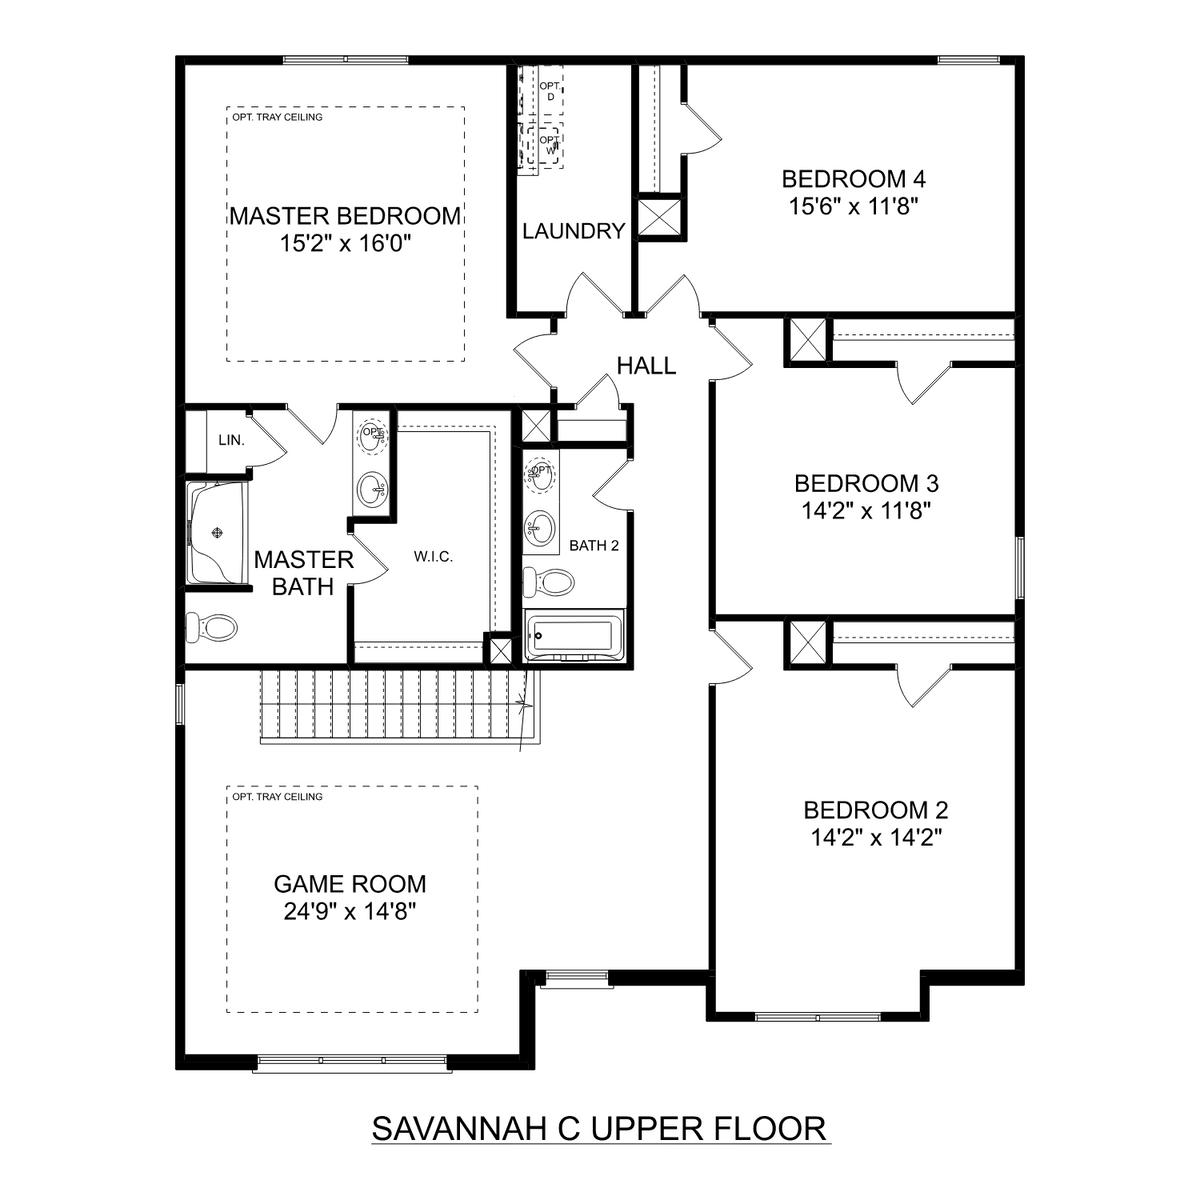 2 - The Savannah C floor plan layout for 127 River Springs Court in Davidson Homes' Flint Meadows community.